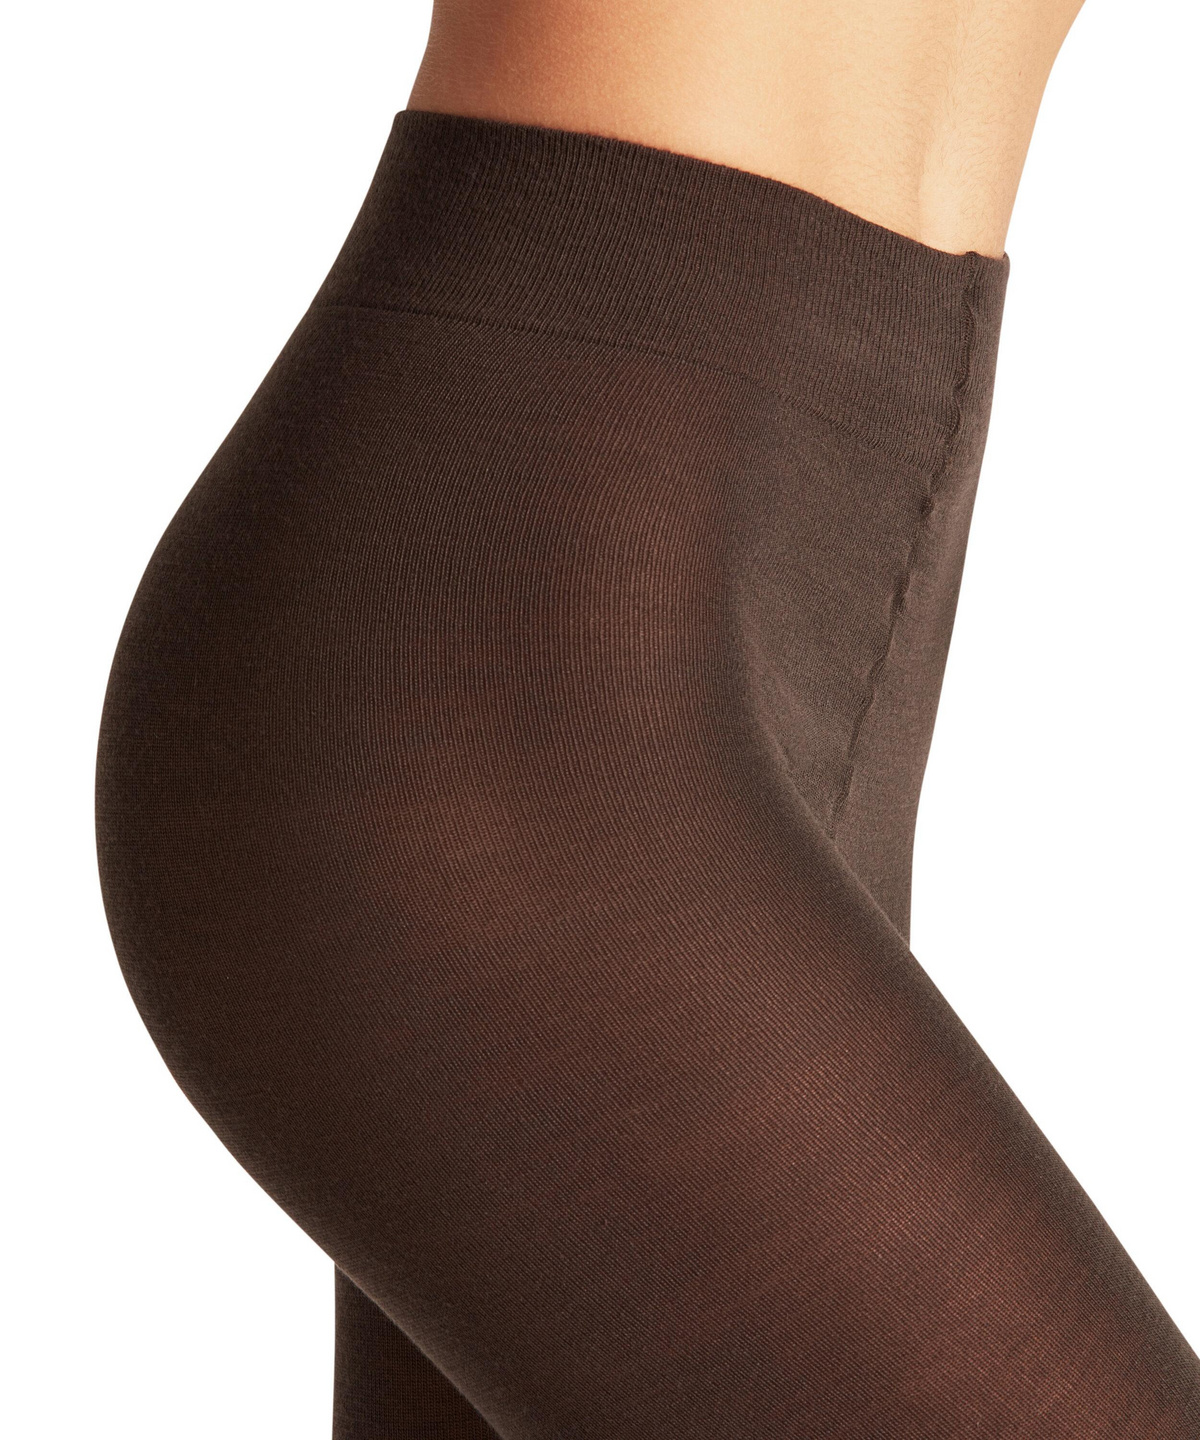 Thermal tights 320den in dark brown, 4.99€